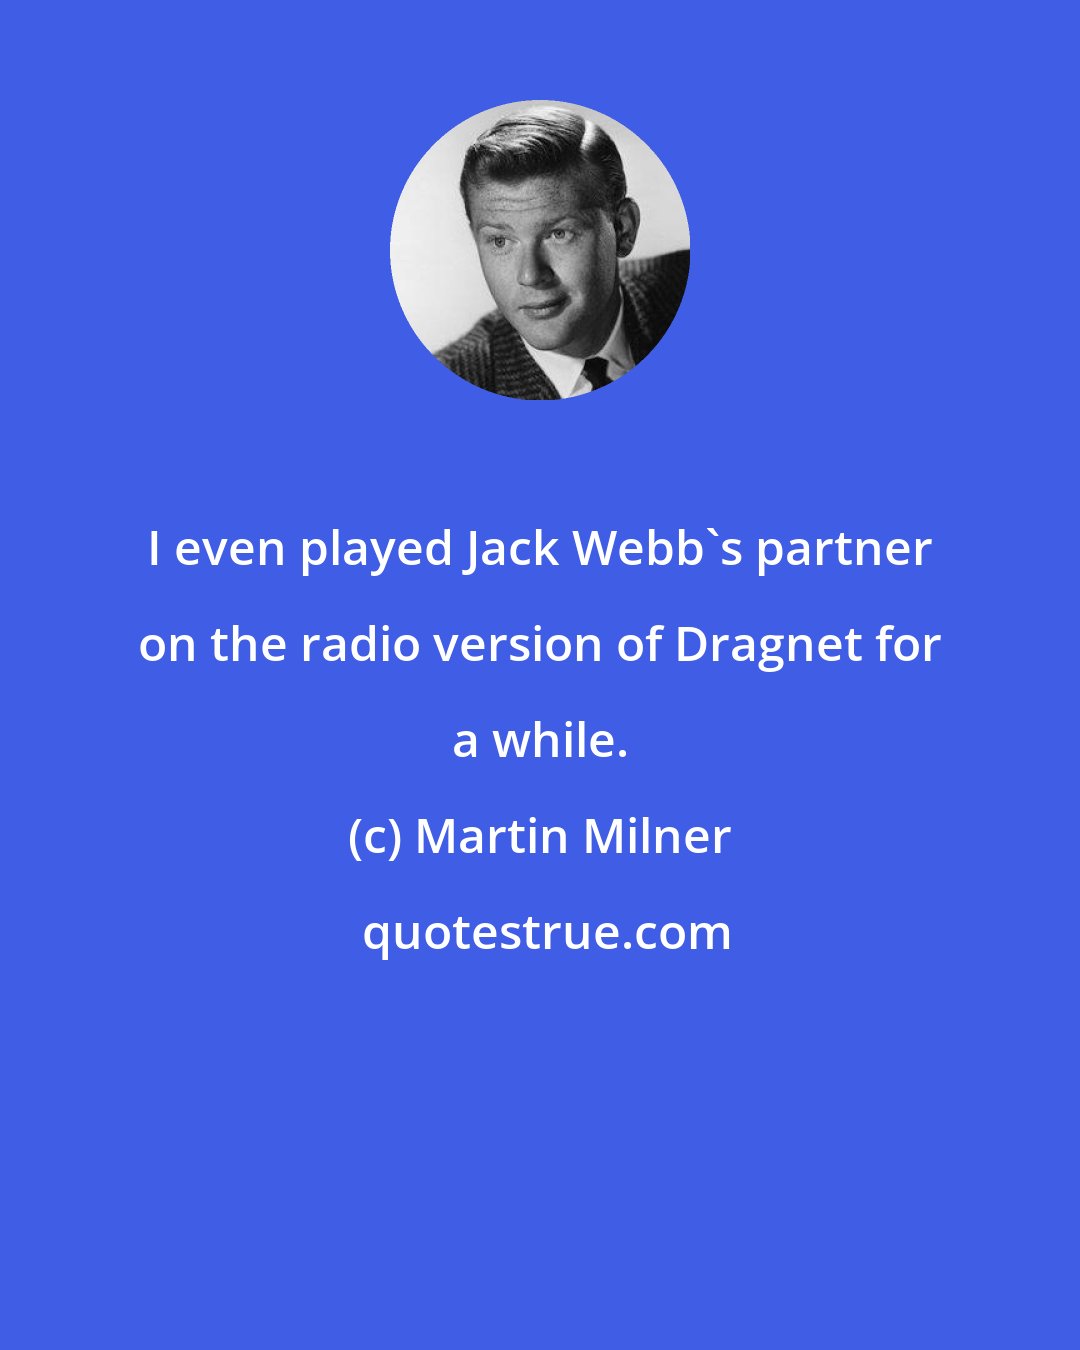 Martin Milner: I even played Jack Webb's partner on the radio version of Dragnet for a while.